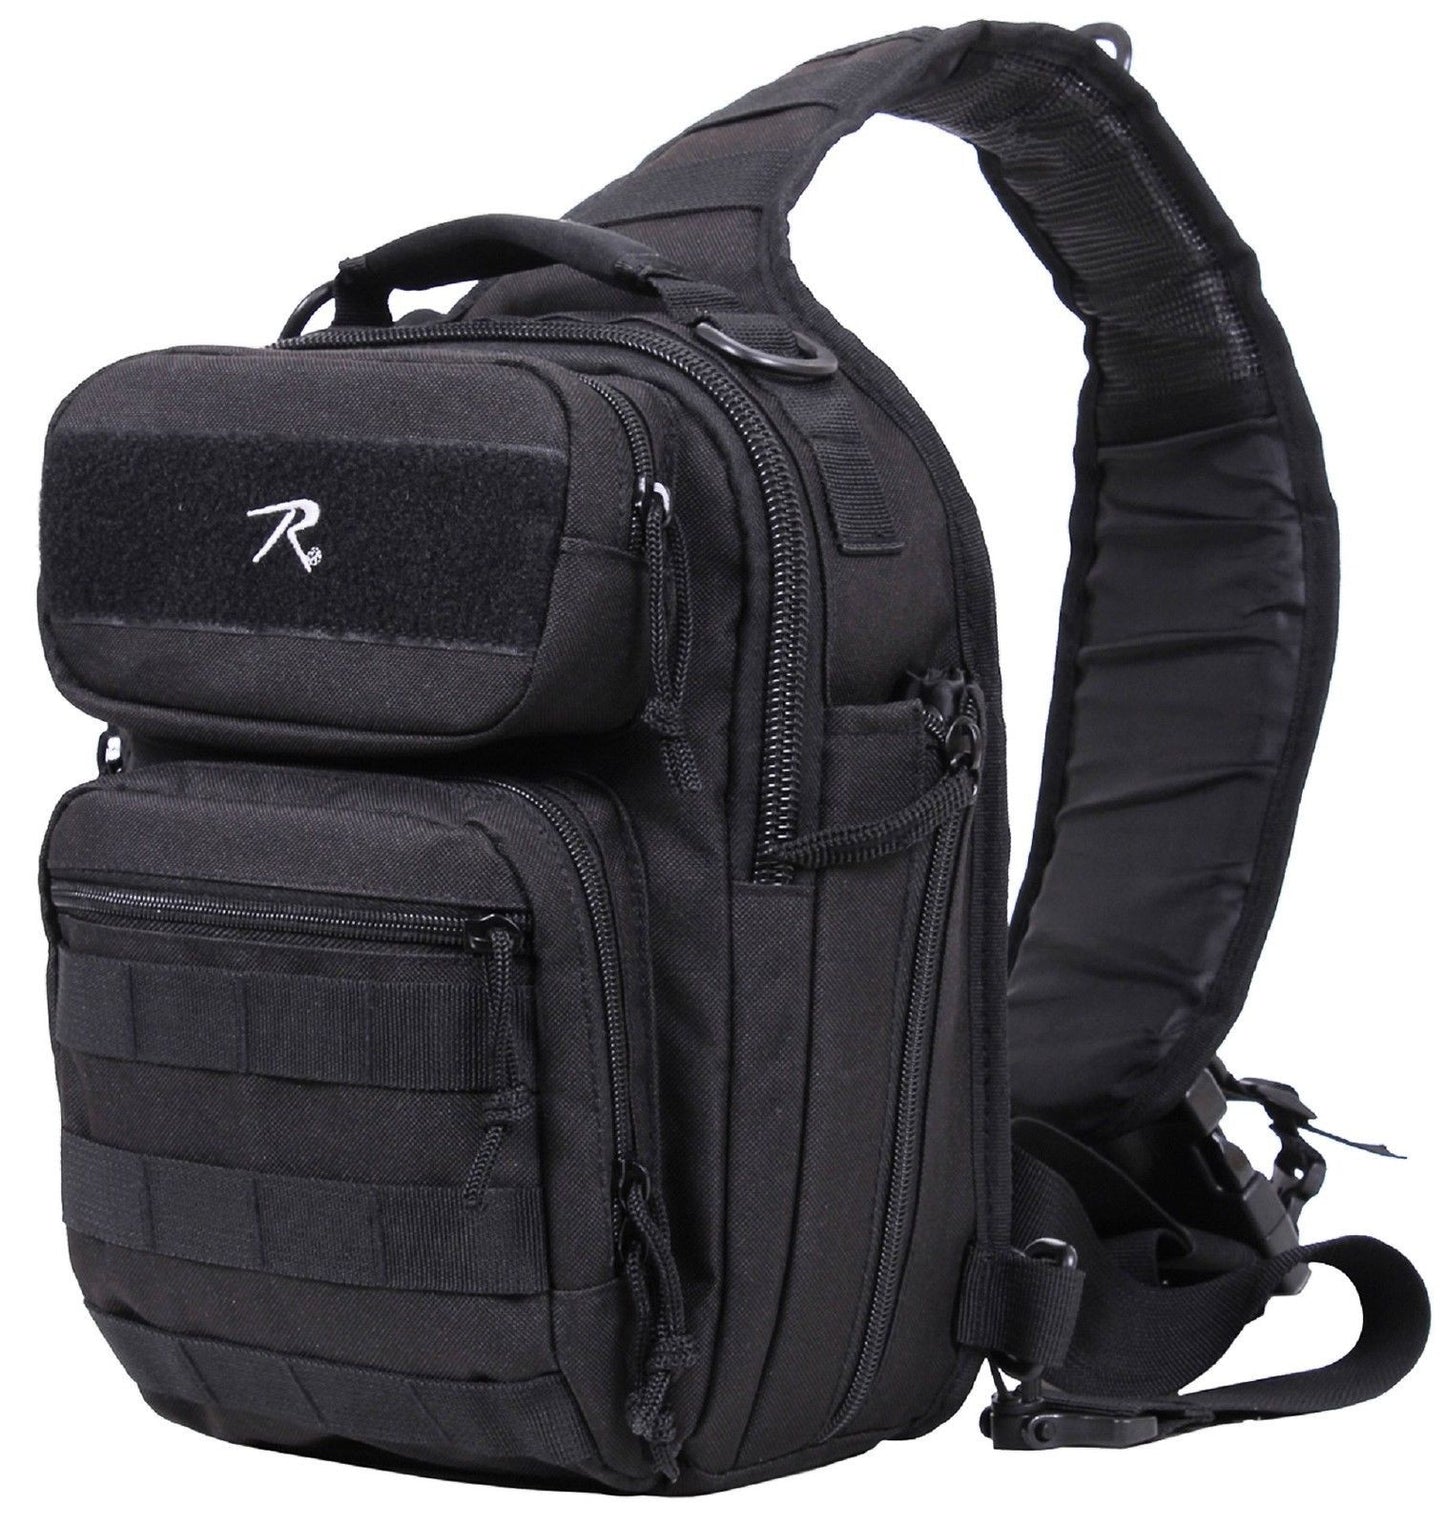 Black Compact Tacti-Sling Shoulder Bag - Durable 12" MOLLE 1 Sling Tactical Pack